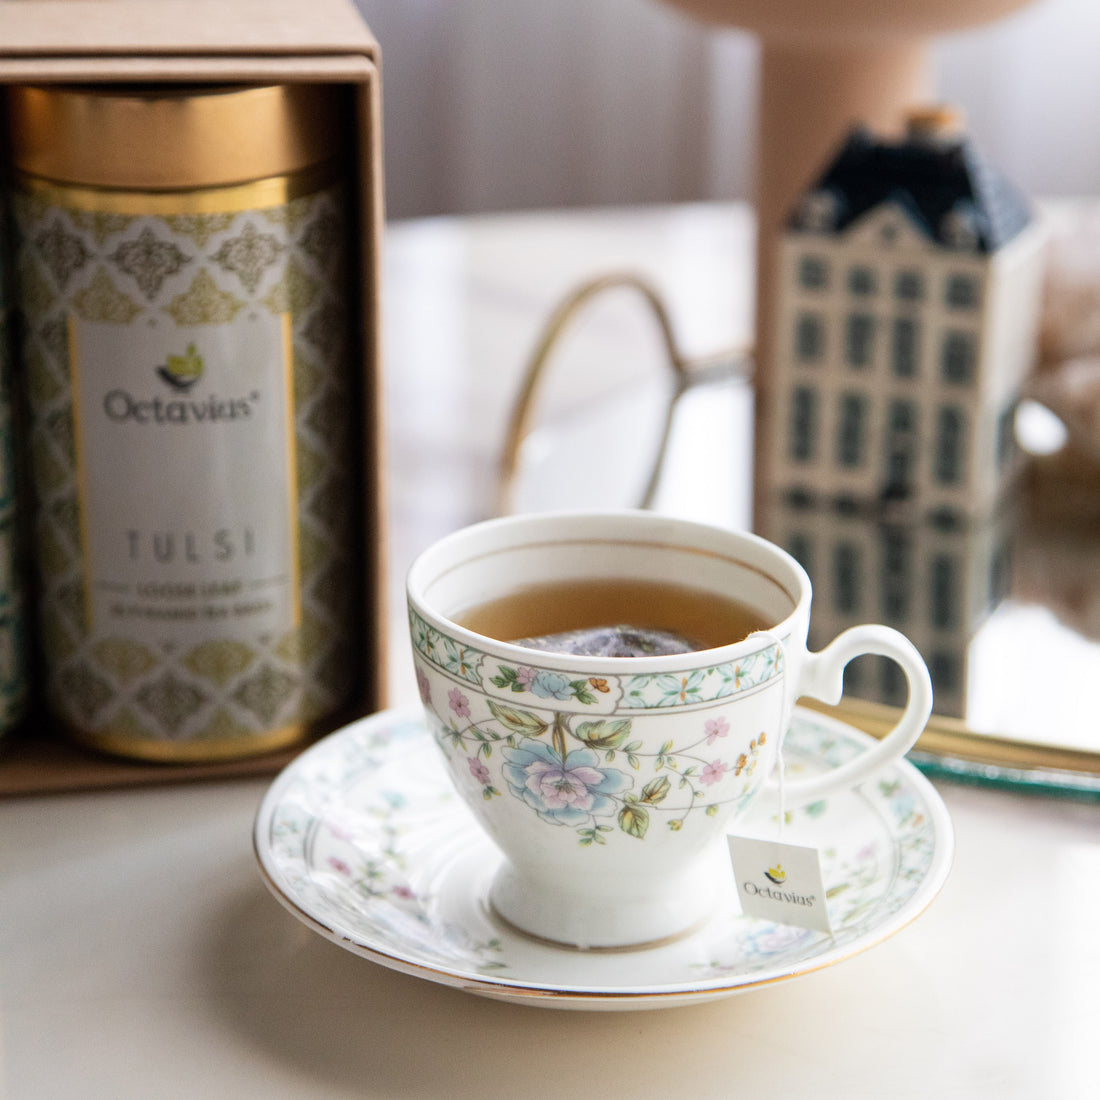 Gourmet Tea Collection-Uplifting Green Infusions (2 Tins)